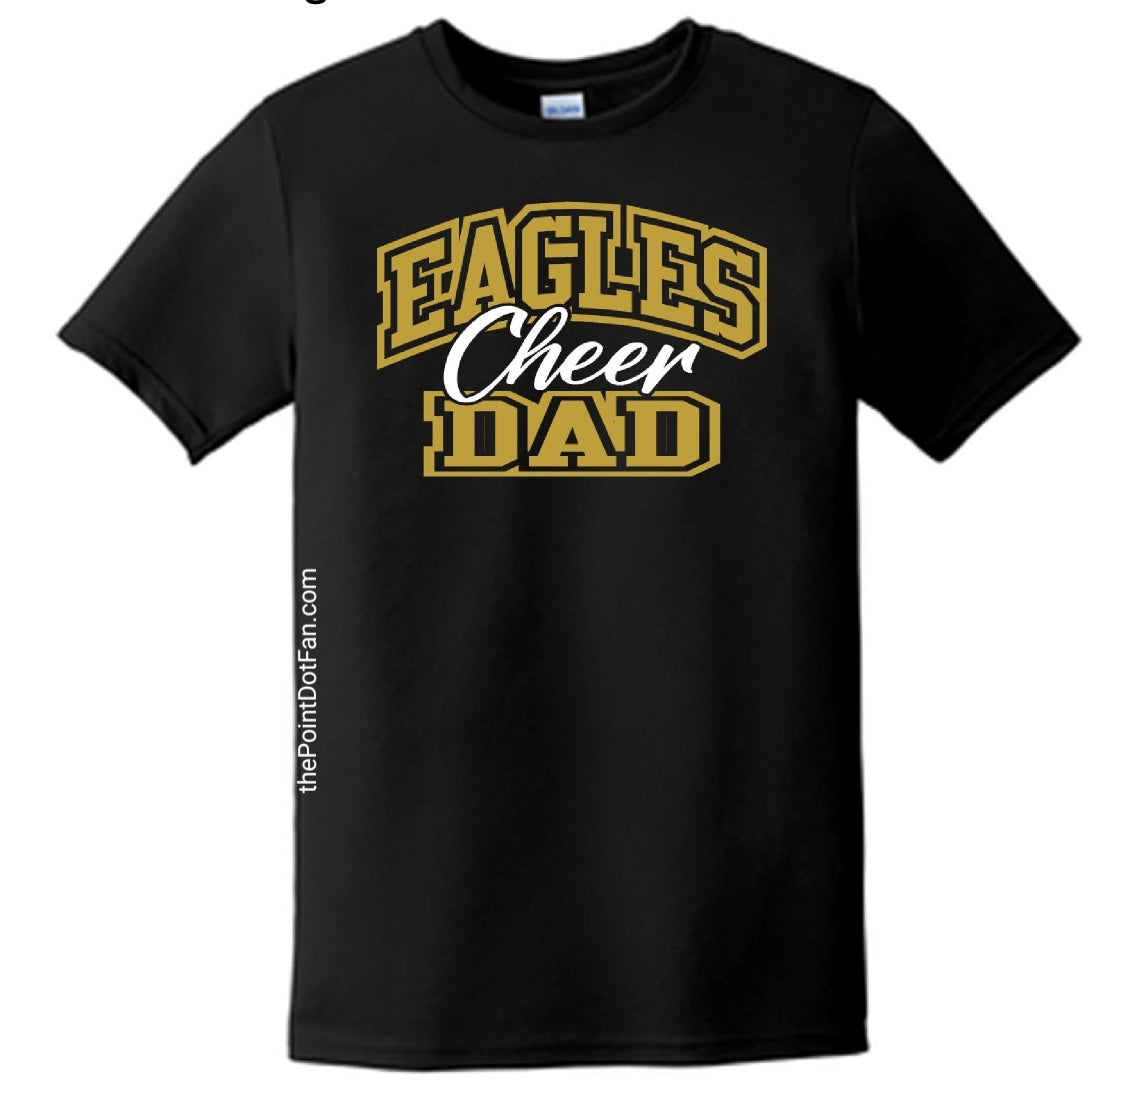 thePoint.Fan Eagles Cheer Dad Tshirt 2x / Gildan Tshirt